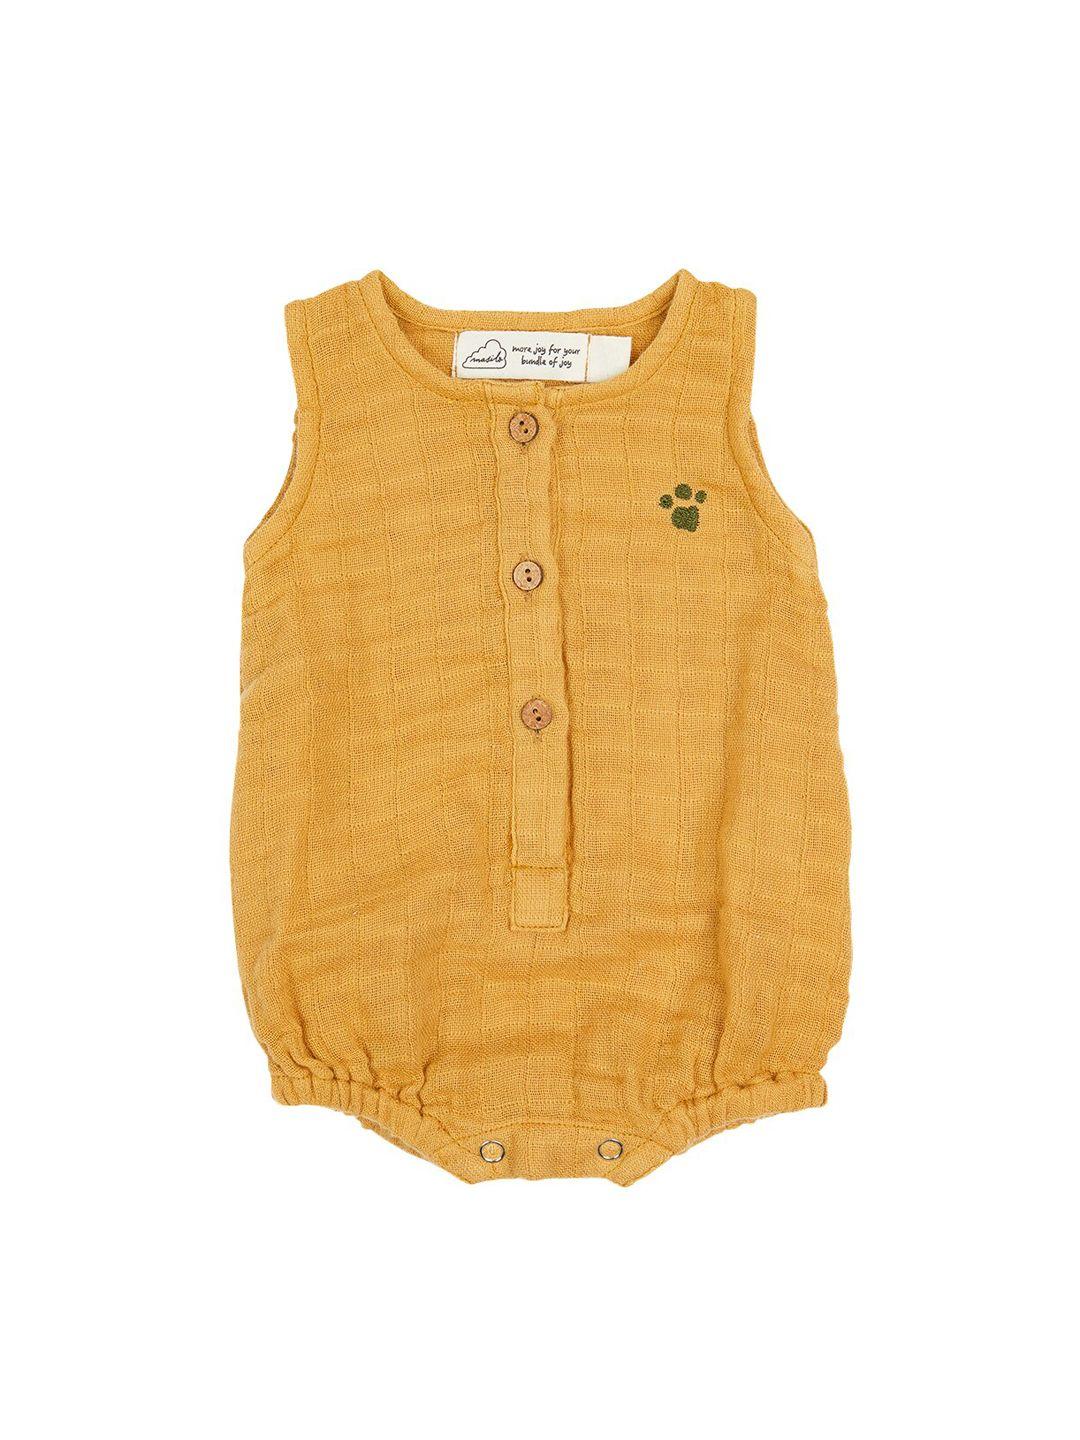 masilo-infant-kids-mustard-yellow-self-designed-organic-cotton-rompers